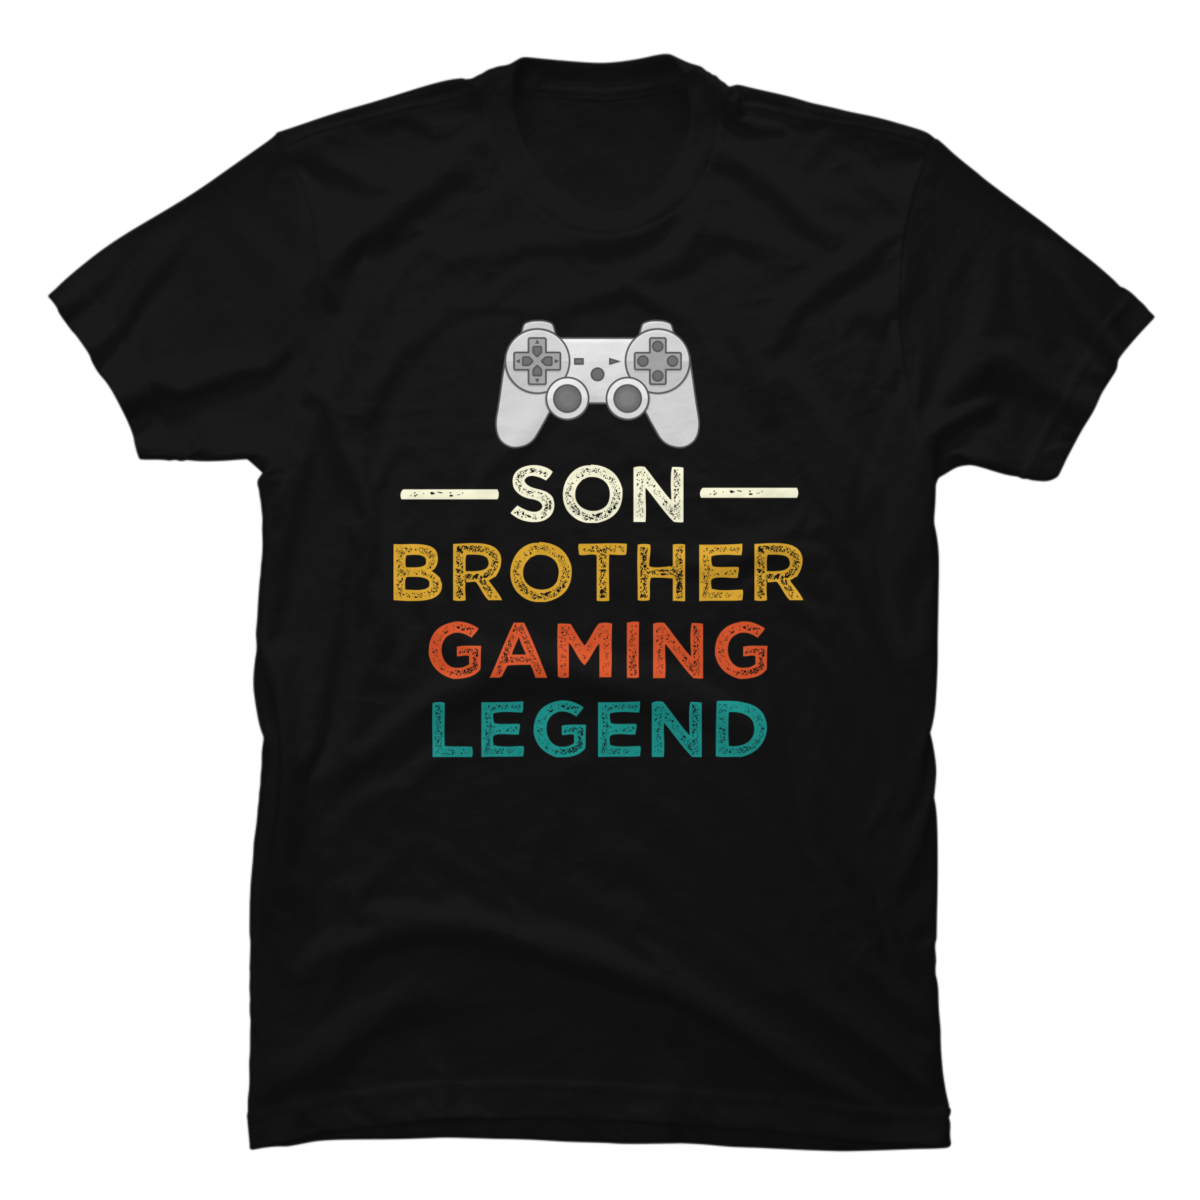 Son Brother Gaming Legend Gamer Gaming T-Shirt - Buy t-shirt designs